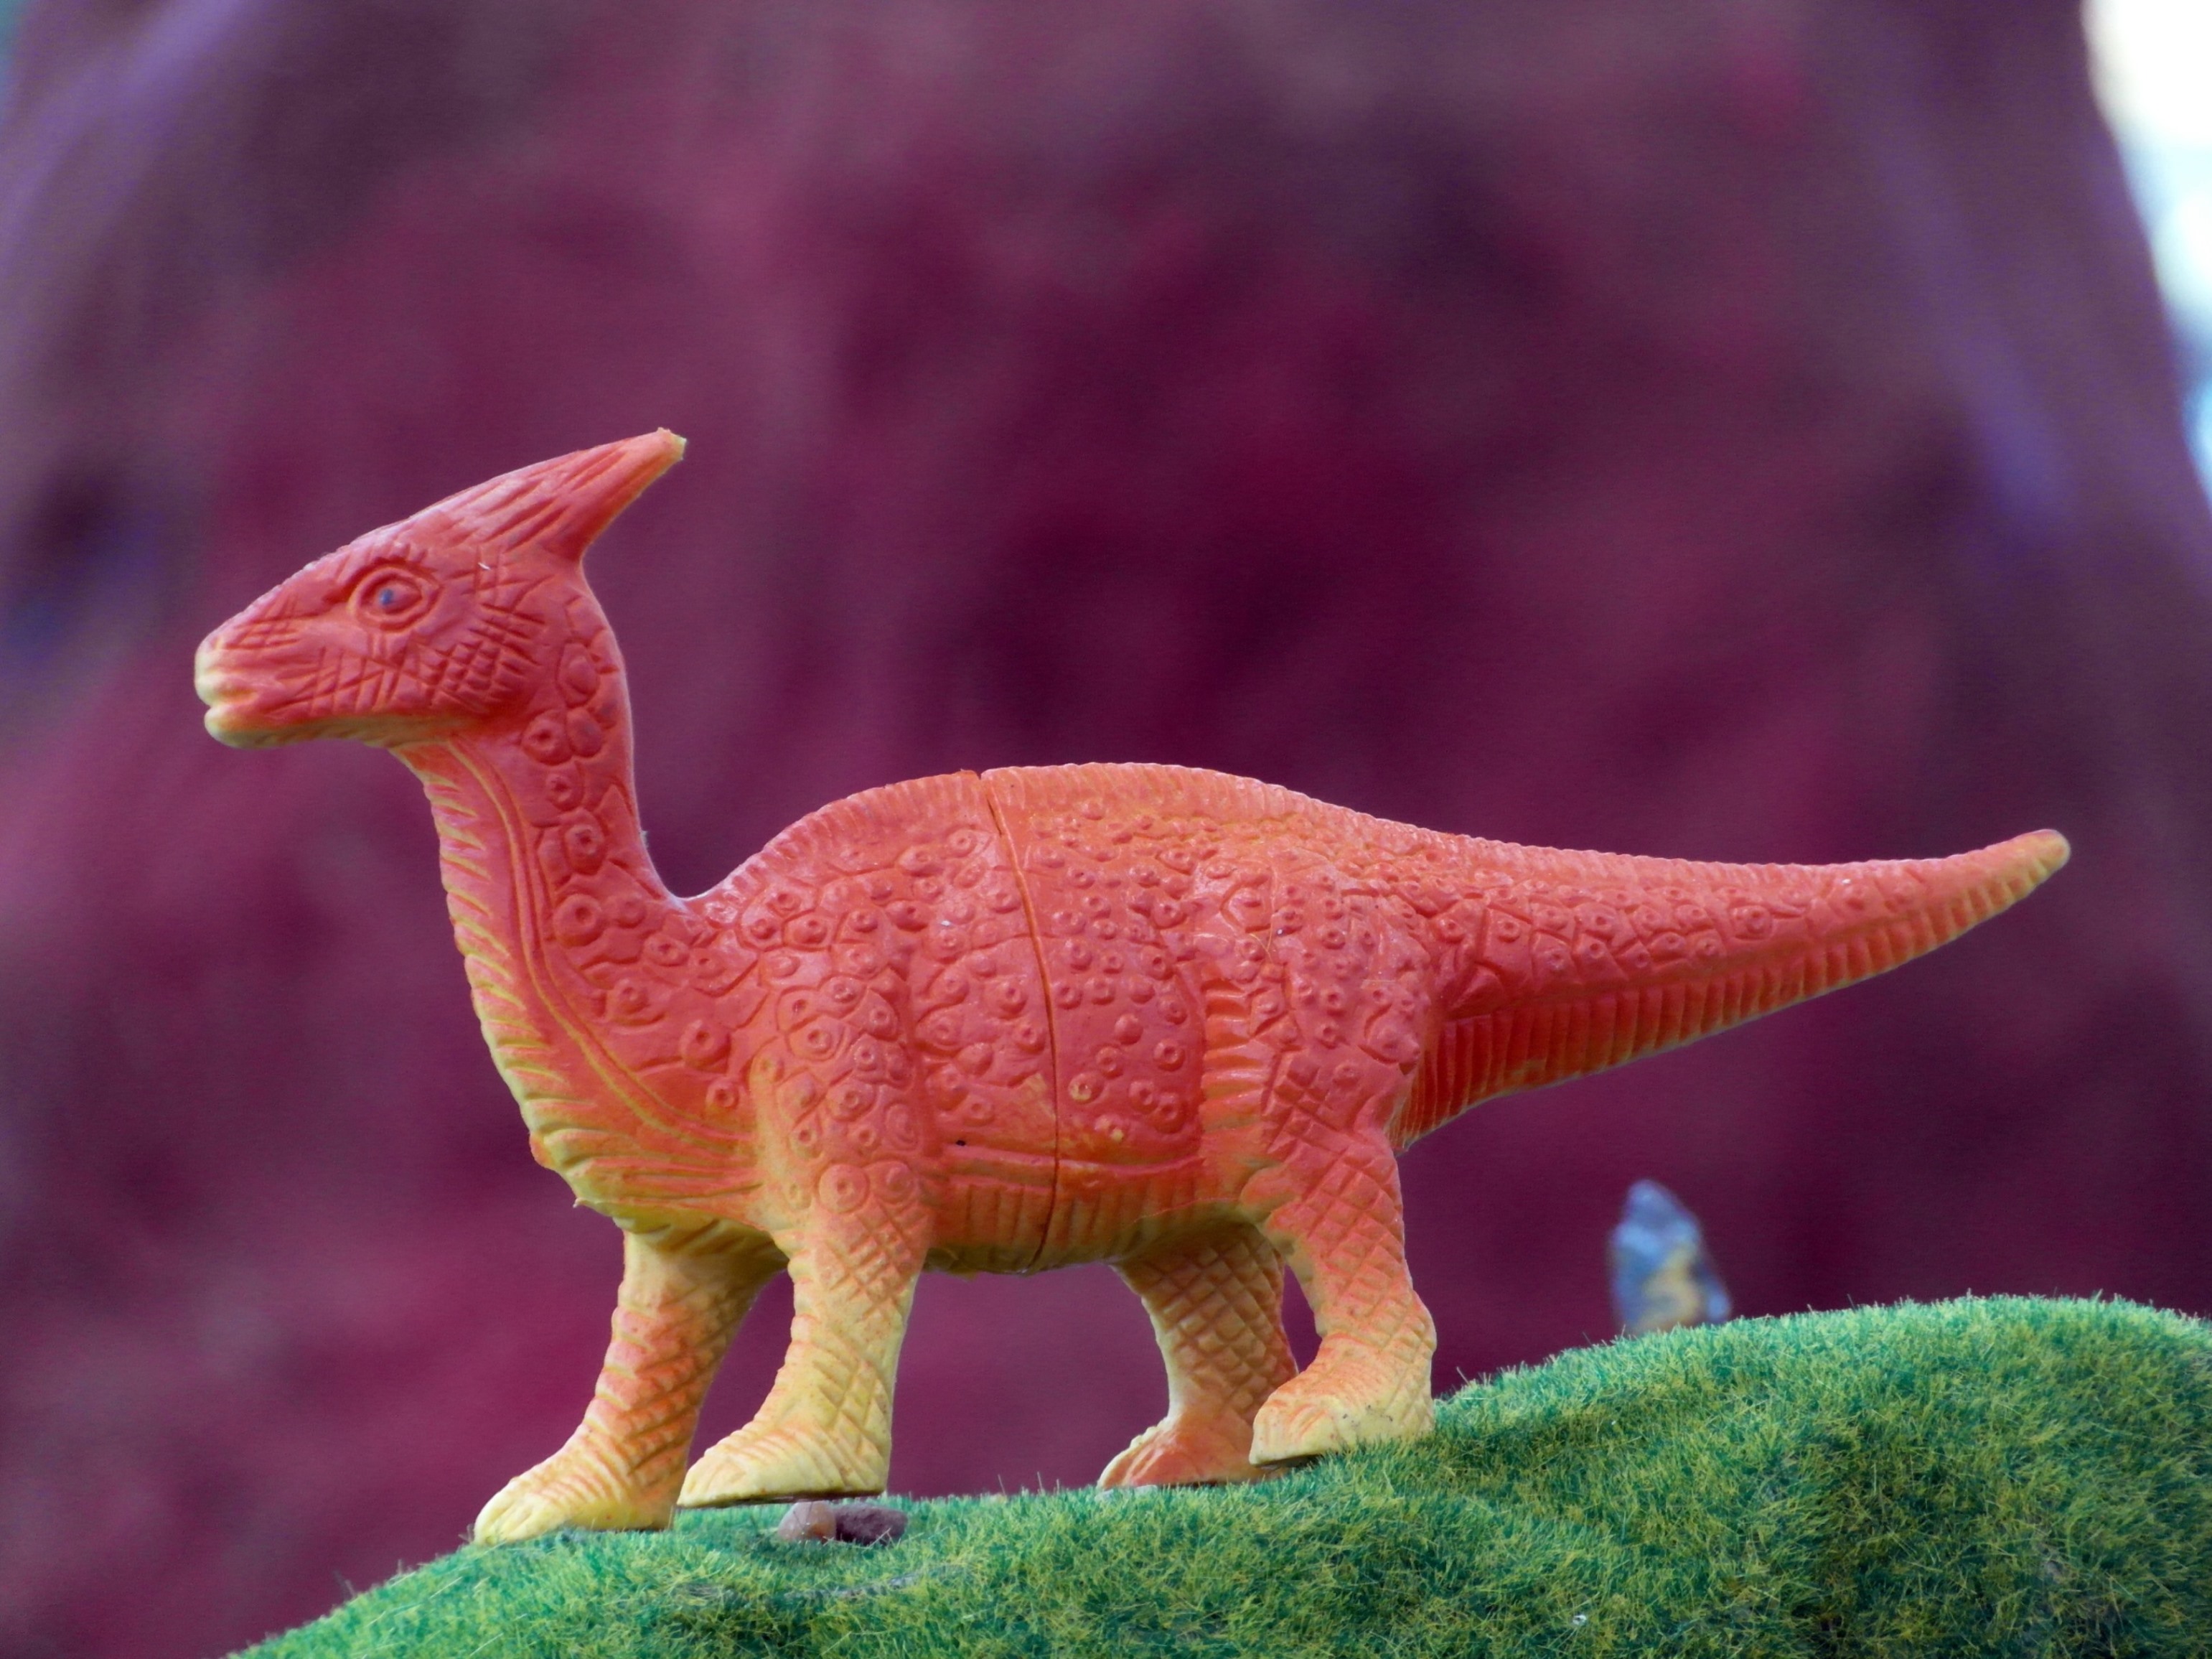 Plastic dinosaur toy photo